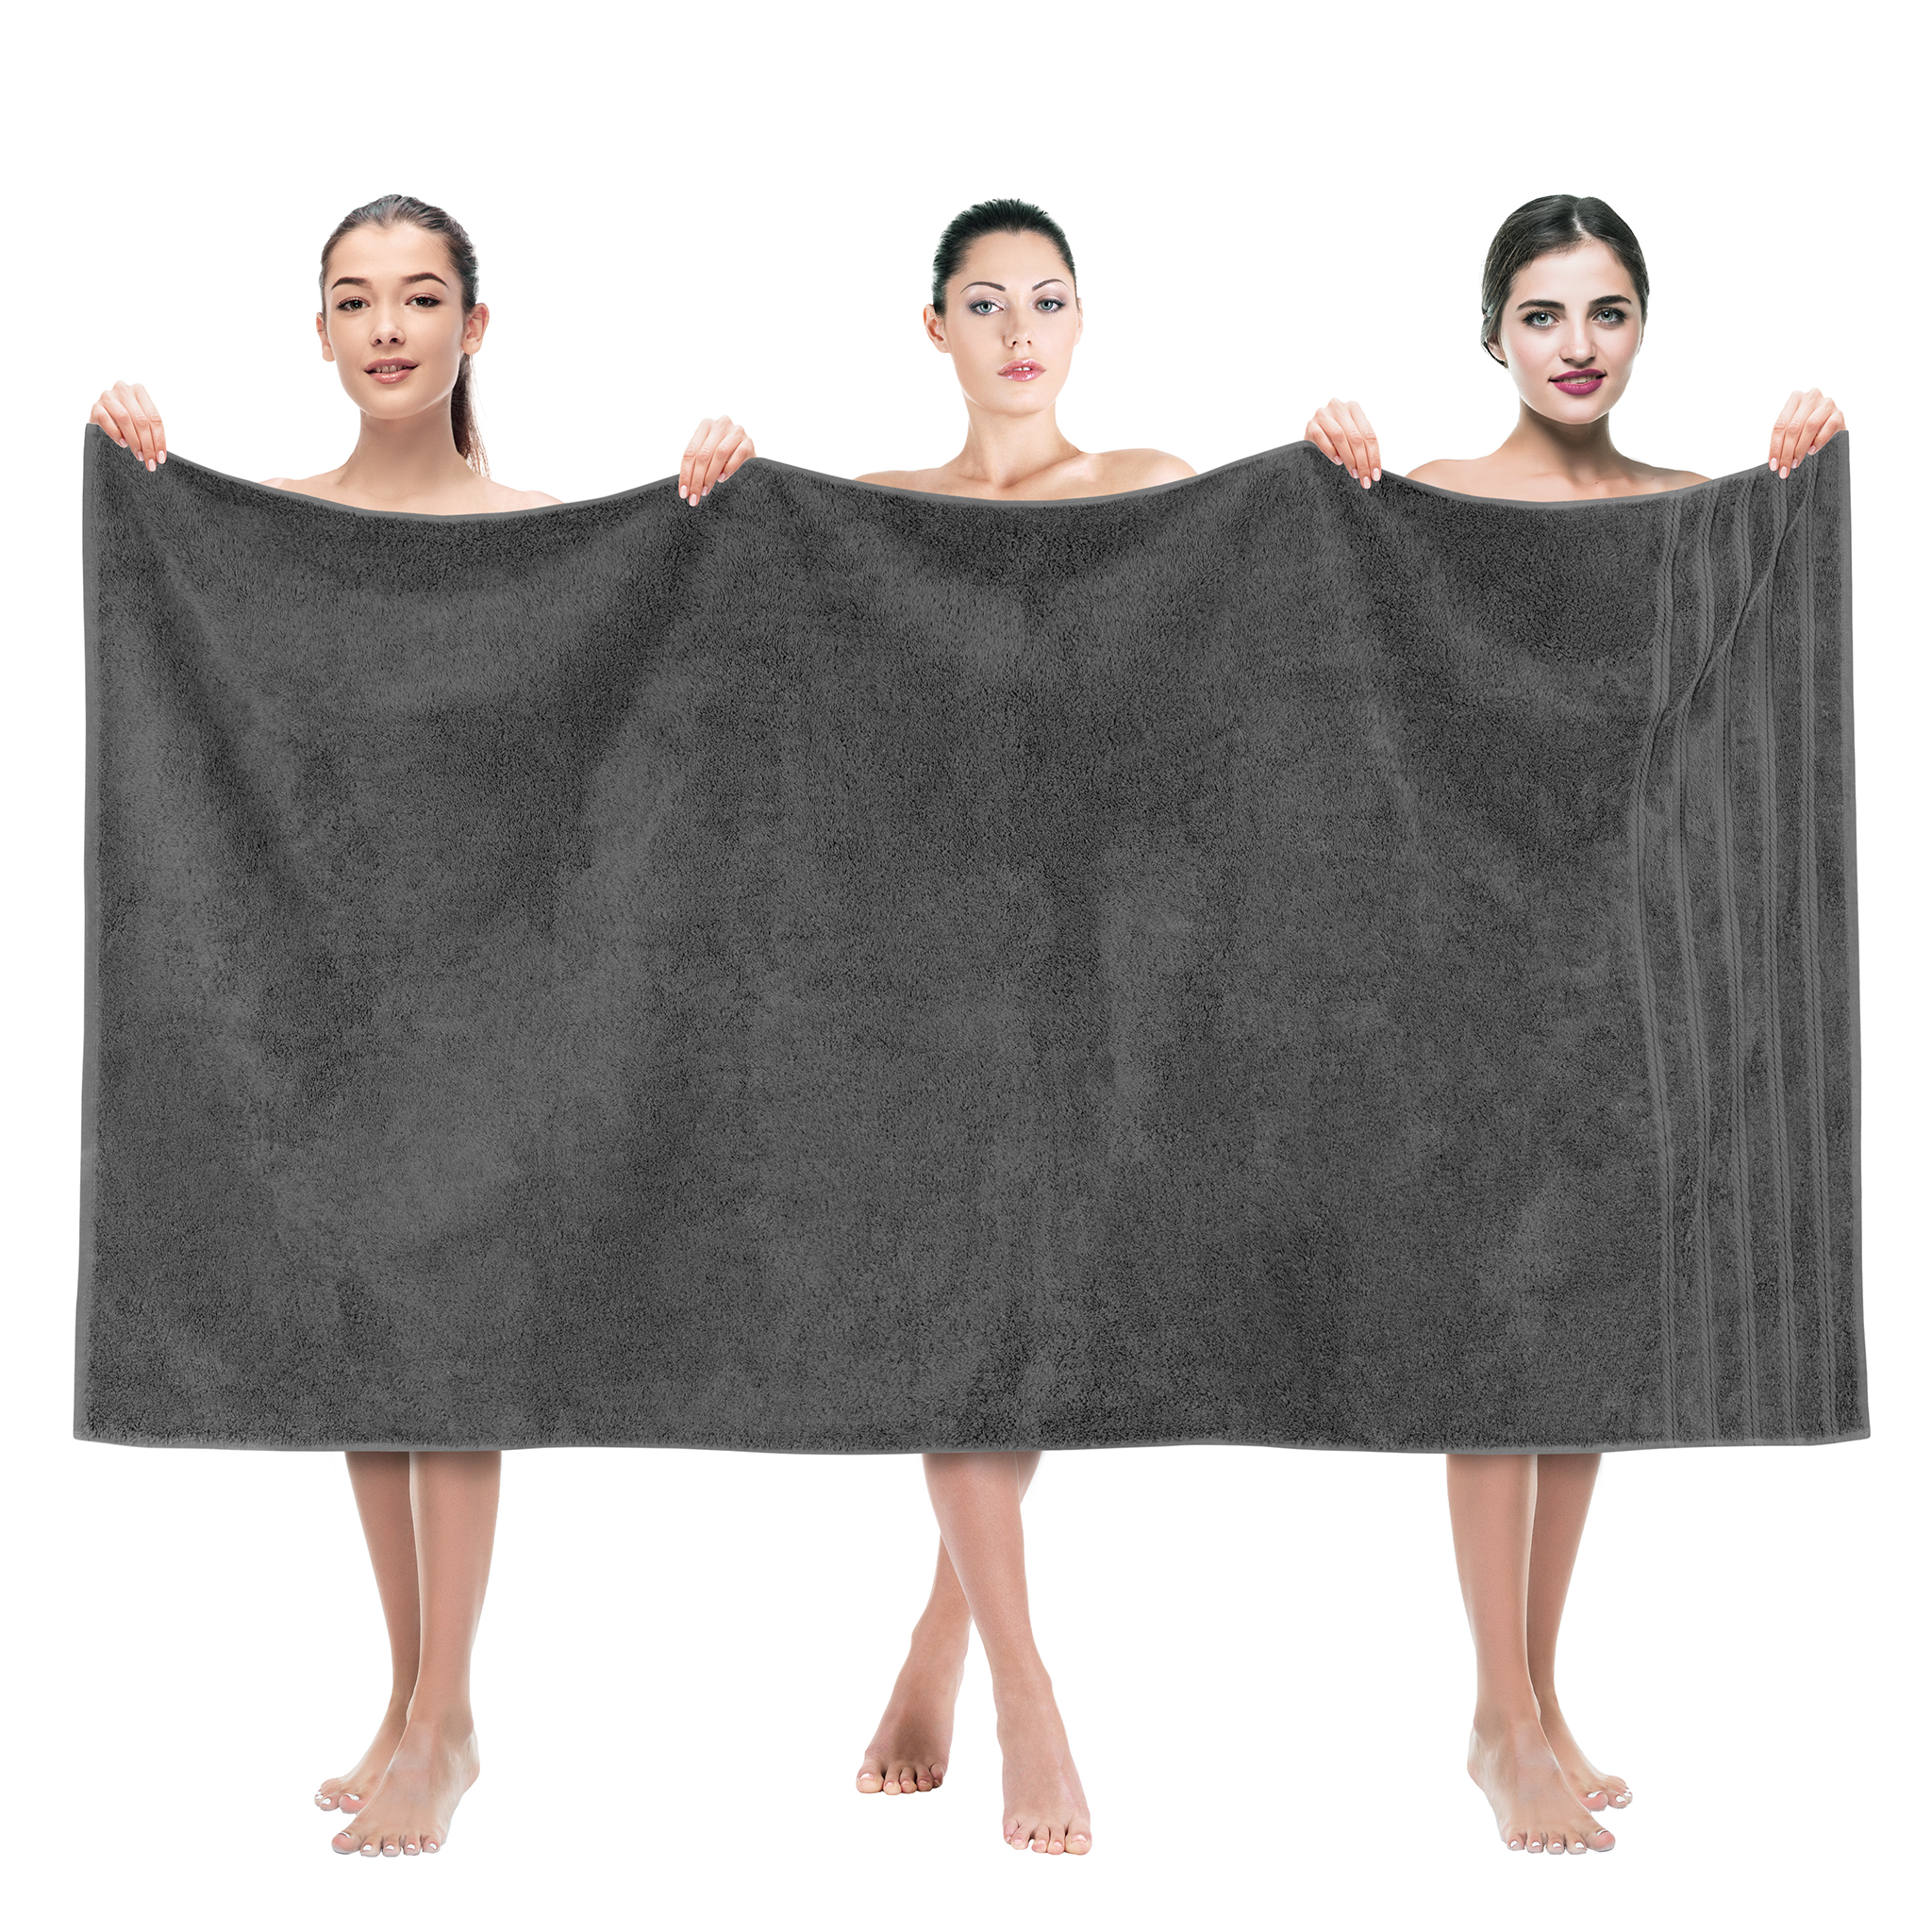 American Soft Linen - 35x70 Jumbo Bath Sheet Turkish Bath Towel - 16 Piece Case Pack - Gray - 1